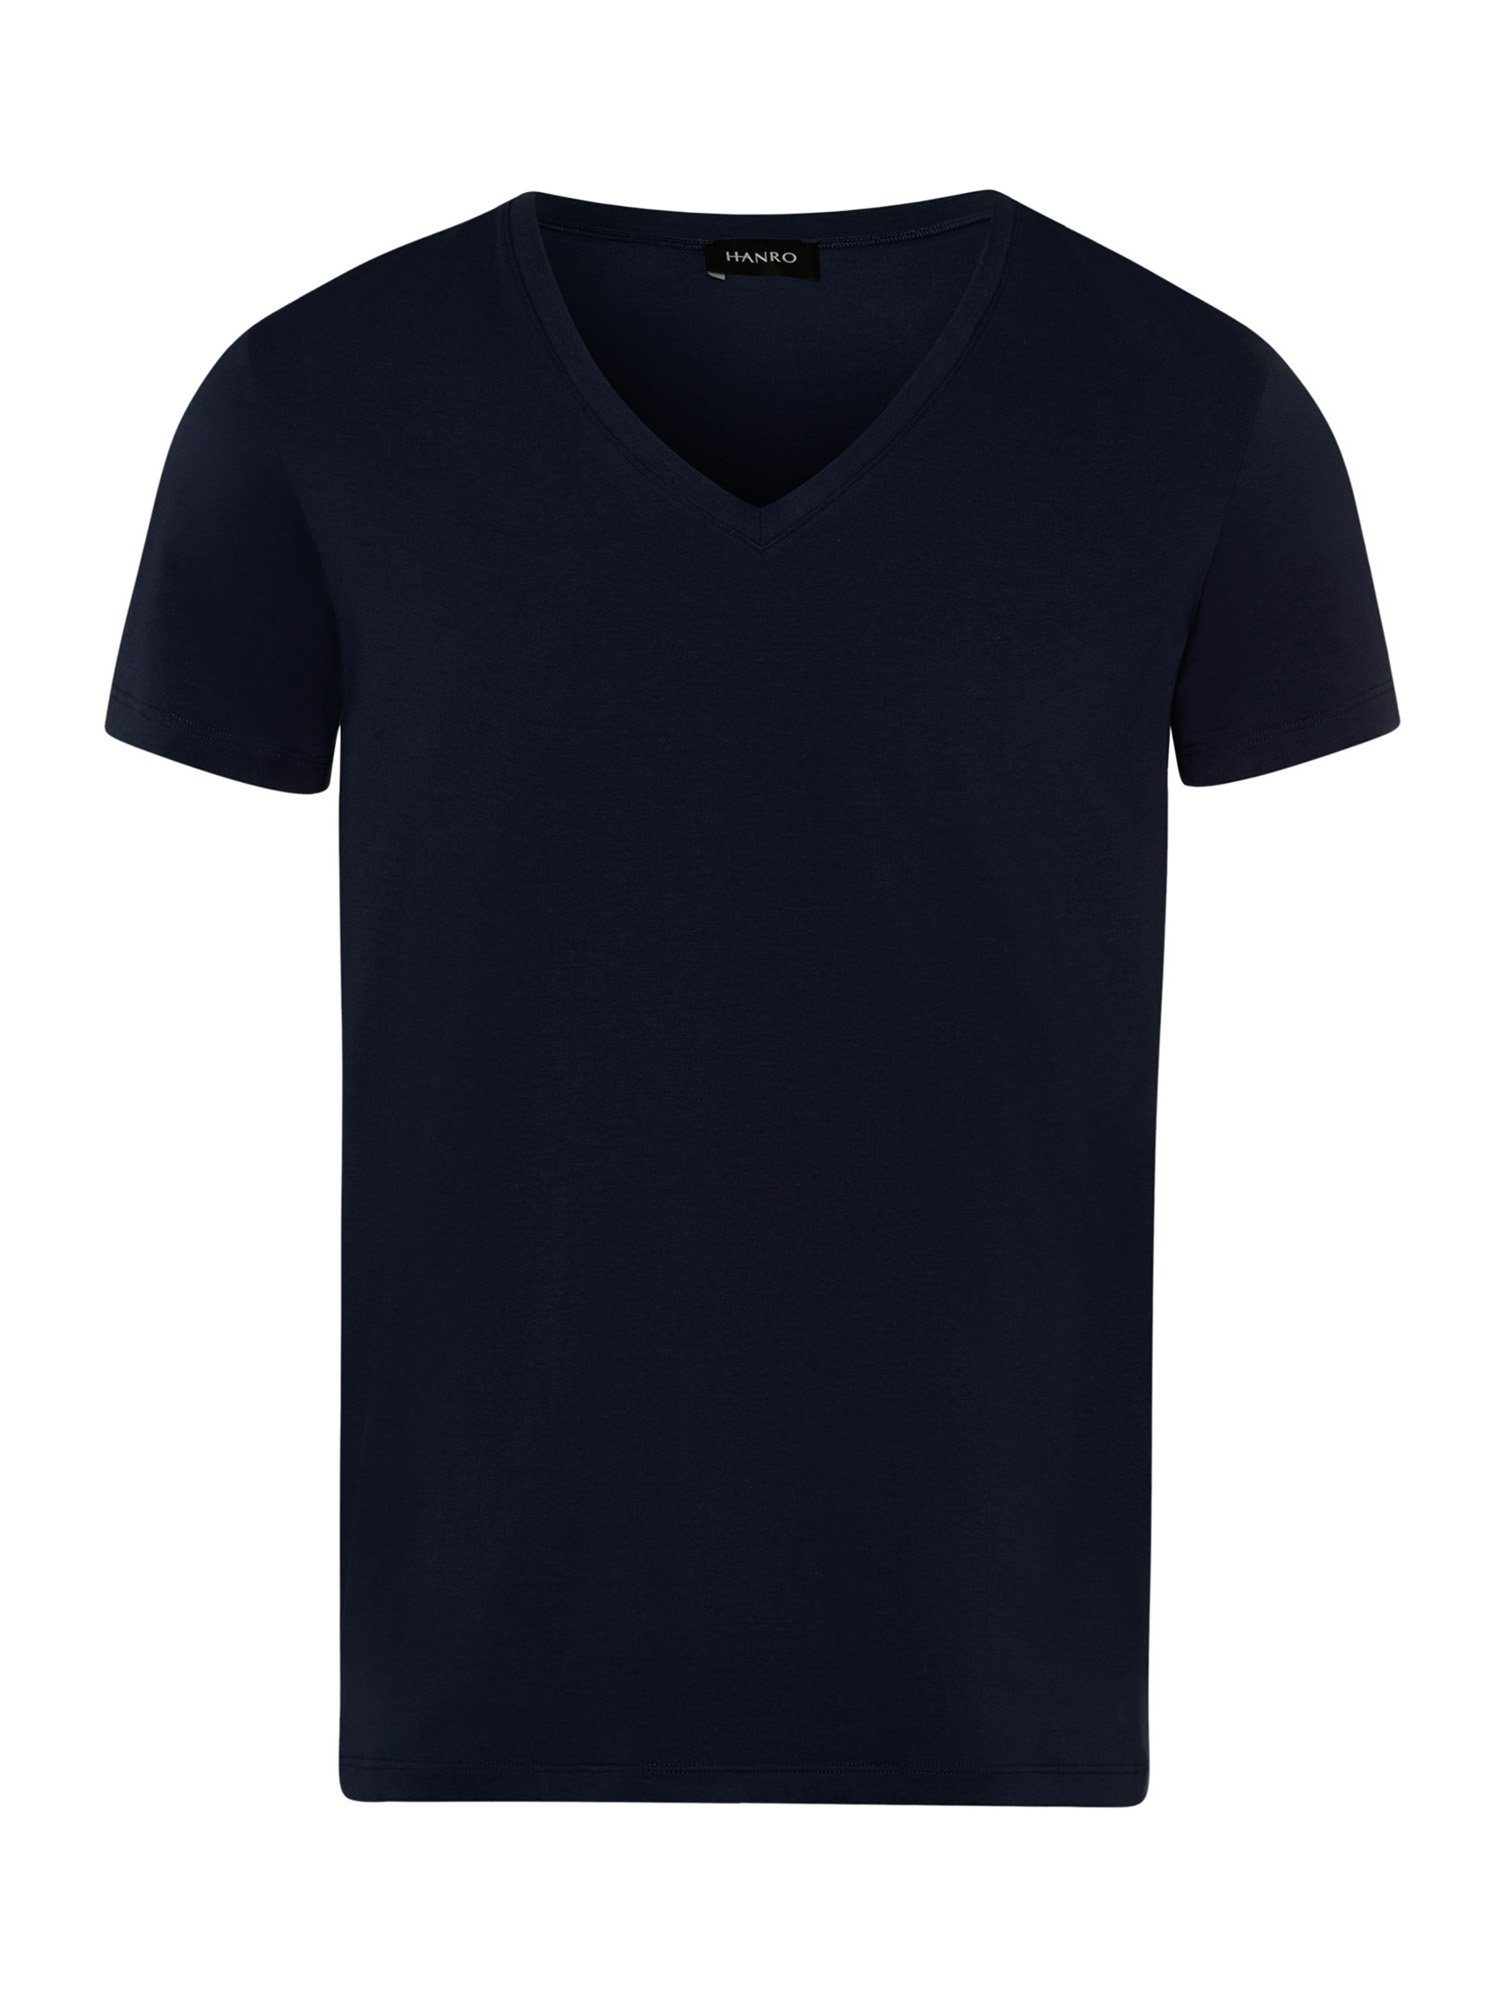 Hanro V-Shirt Cotton Superior midnight navy